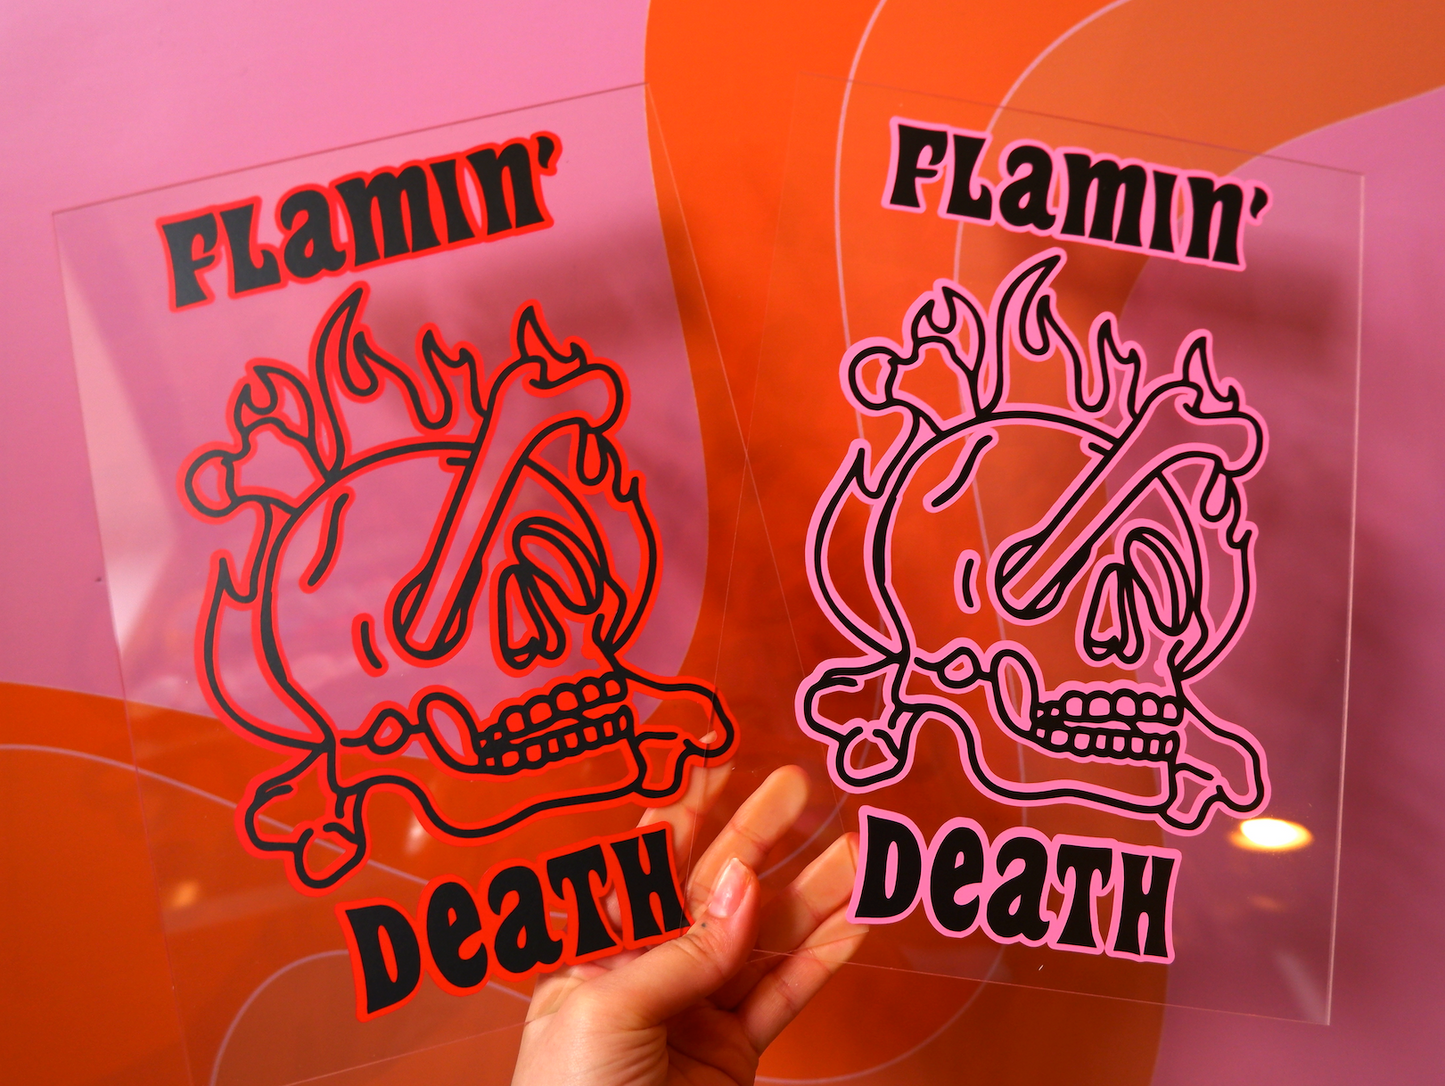 Flamin' Death clear acrylic vinyl poster plaque